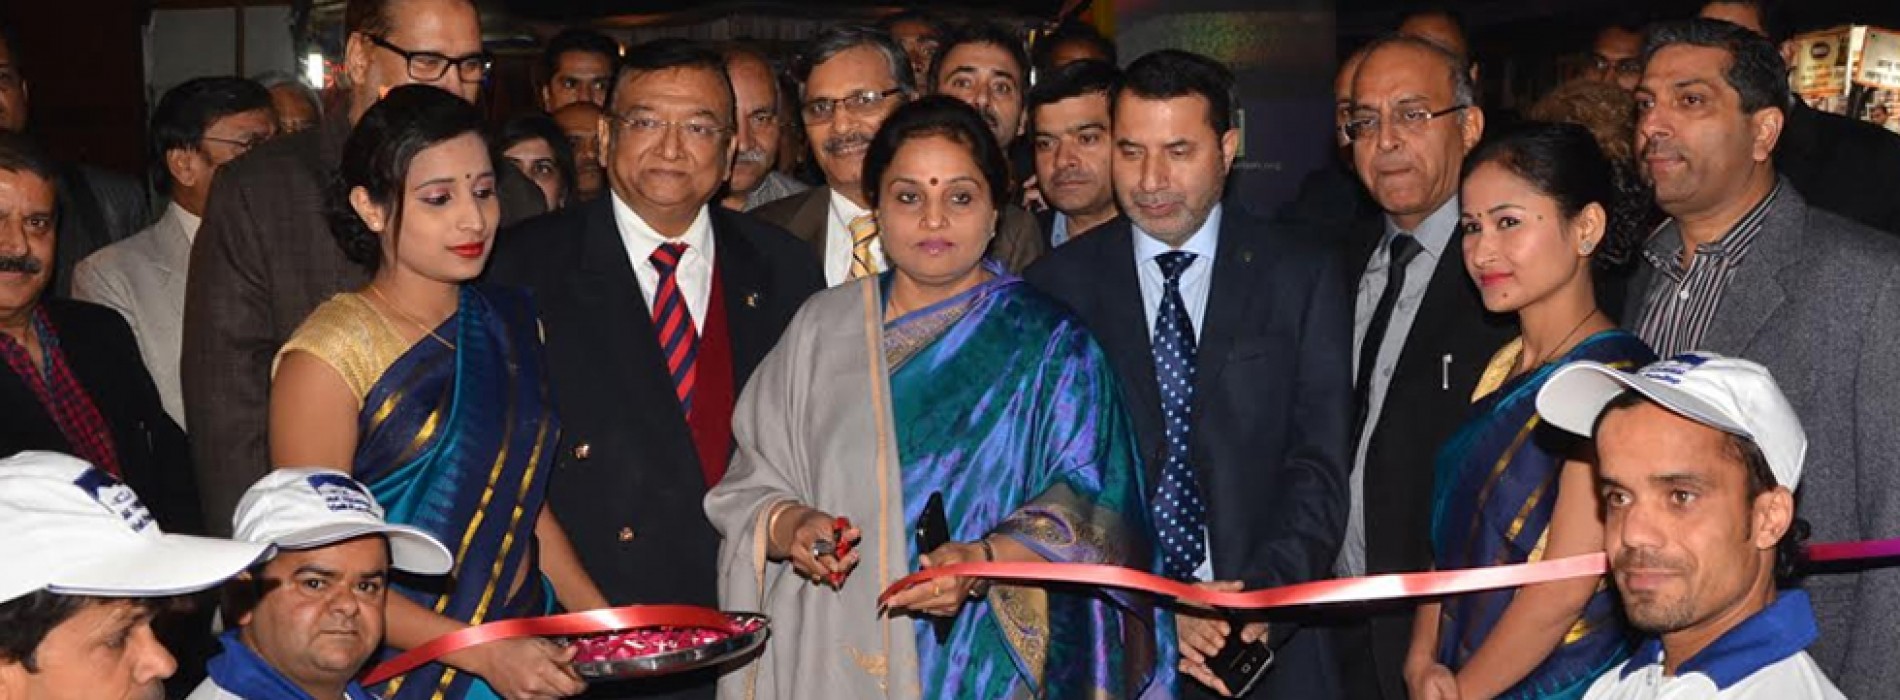 Priya Sethi inaugurates J&K Tourism Food, Craft & Culture Festival 2016 at Dilli Haat